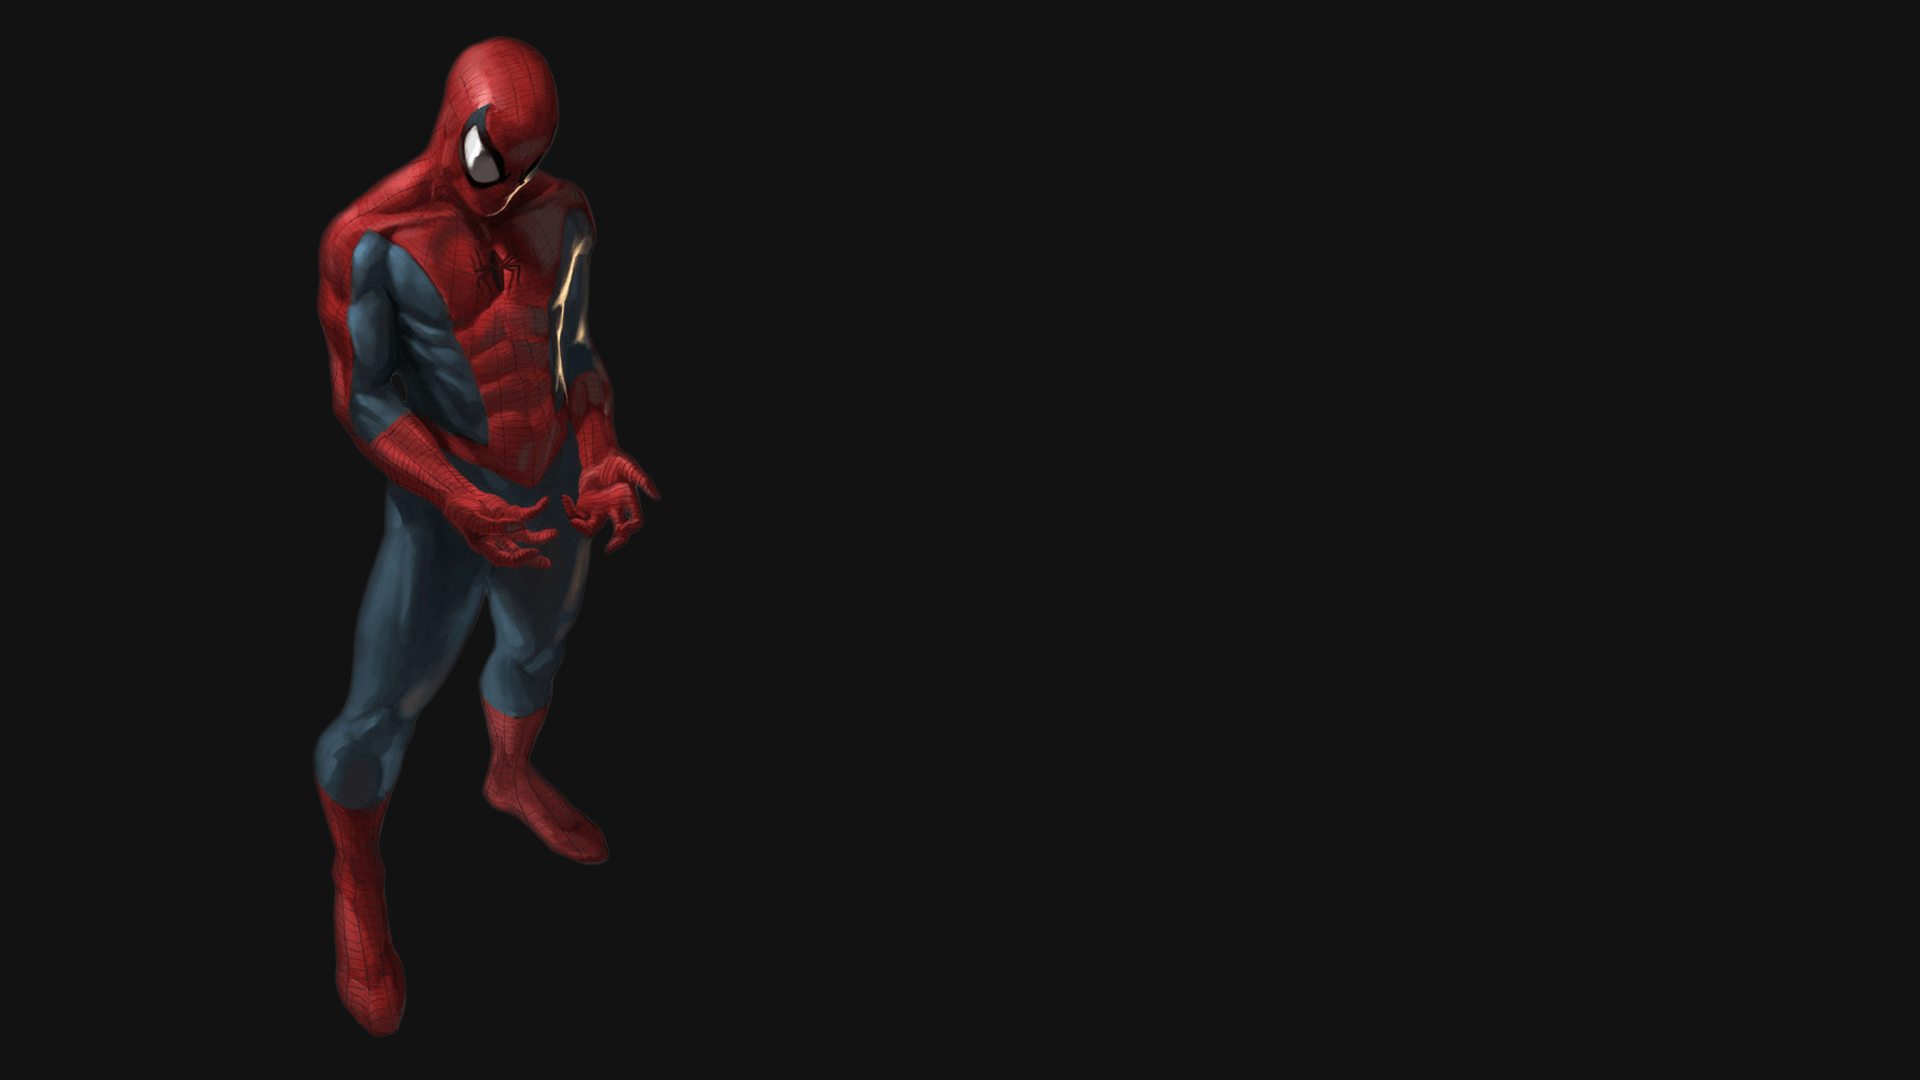 spiderman black background HD wallpaper for desktop. spiderman